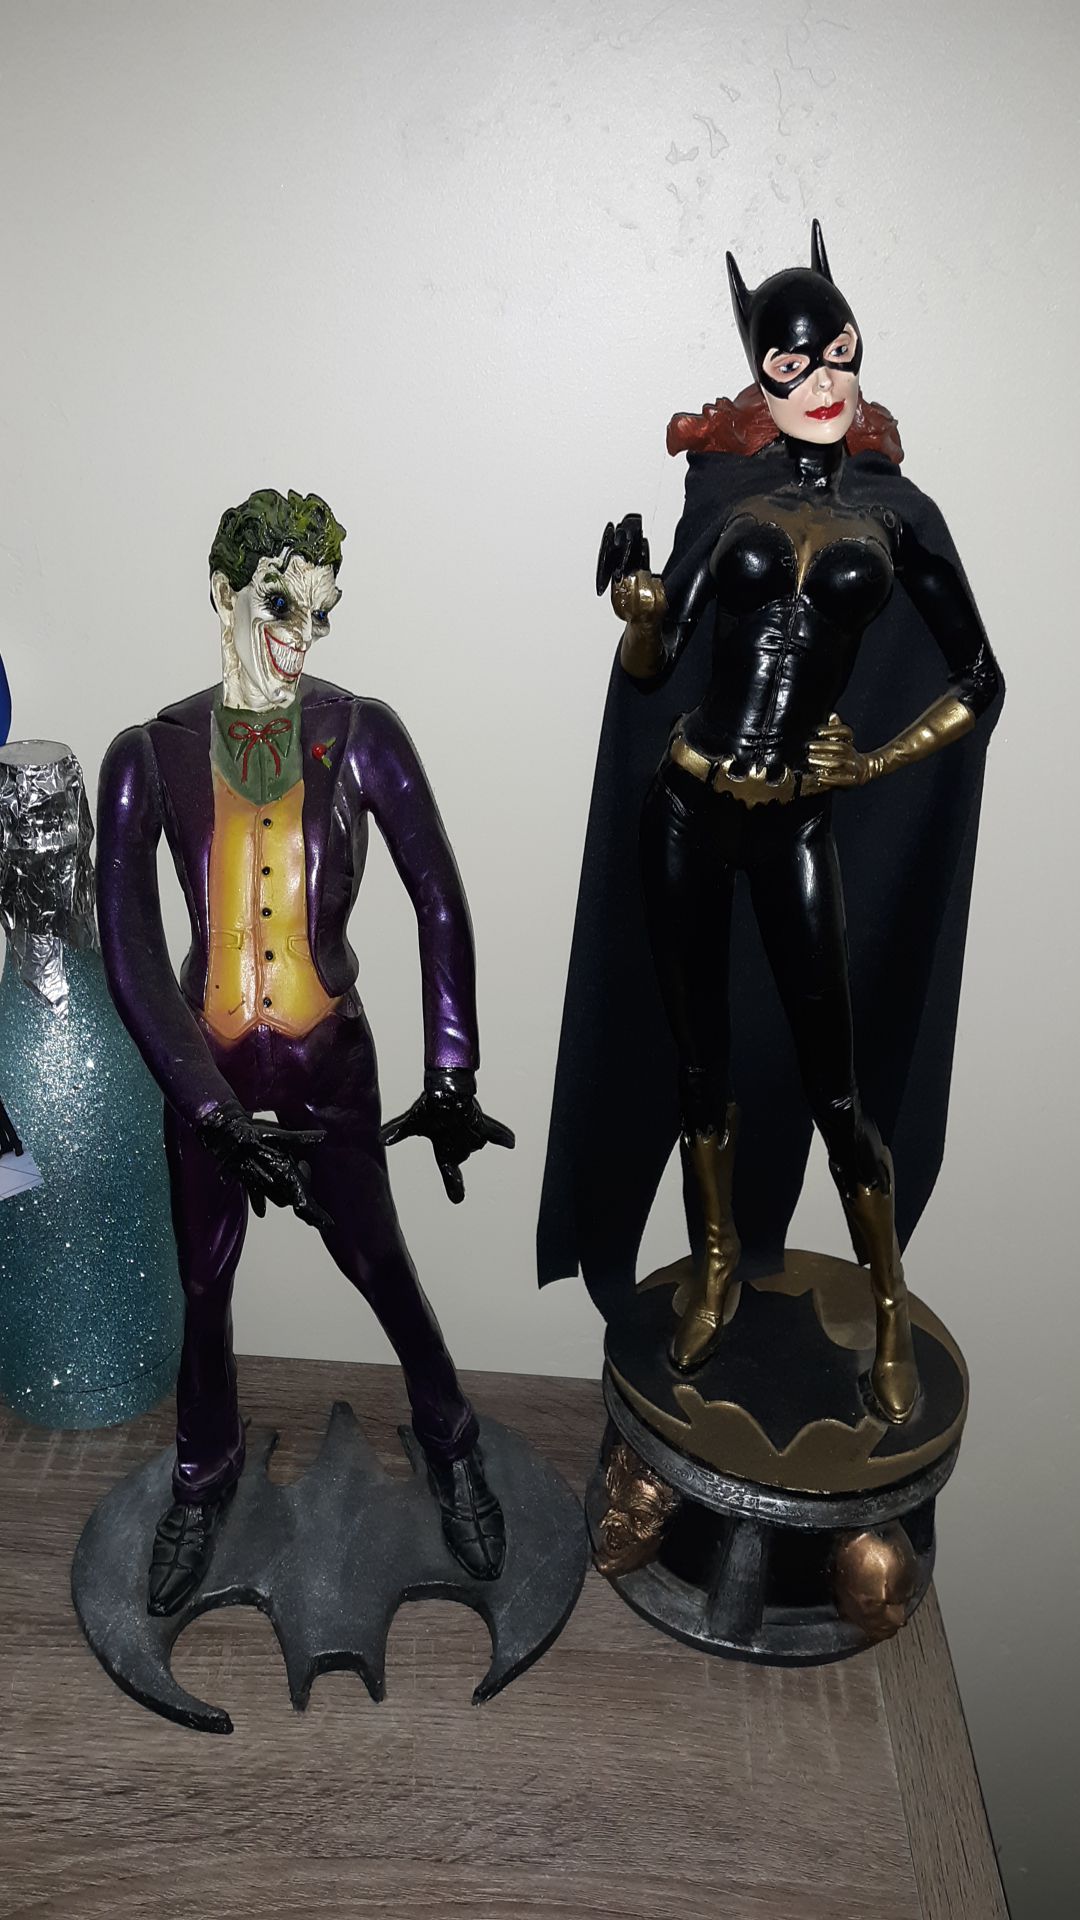 Joker and Batgirl statue